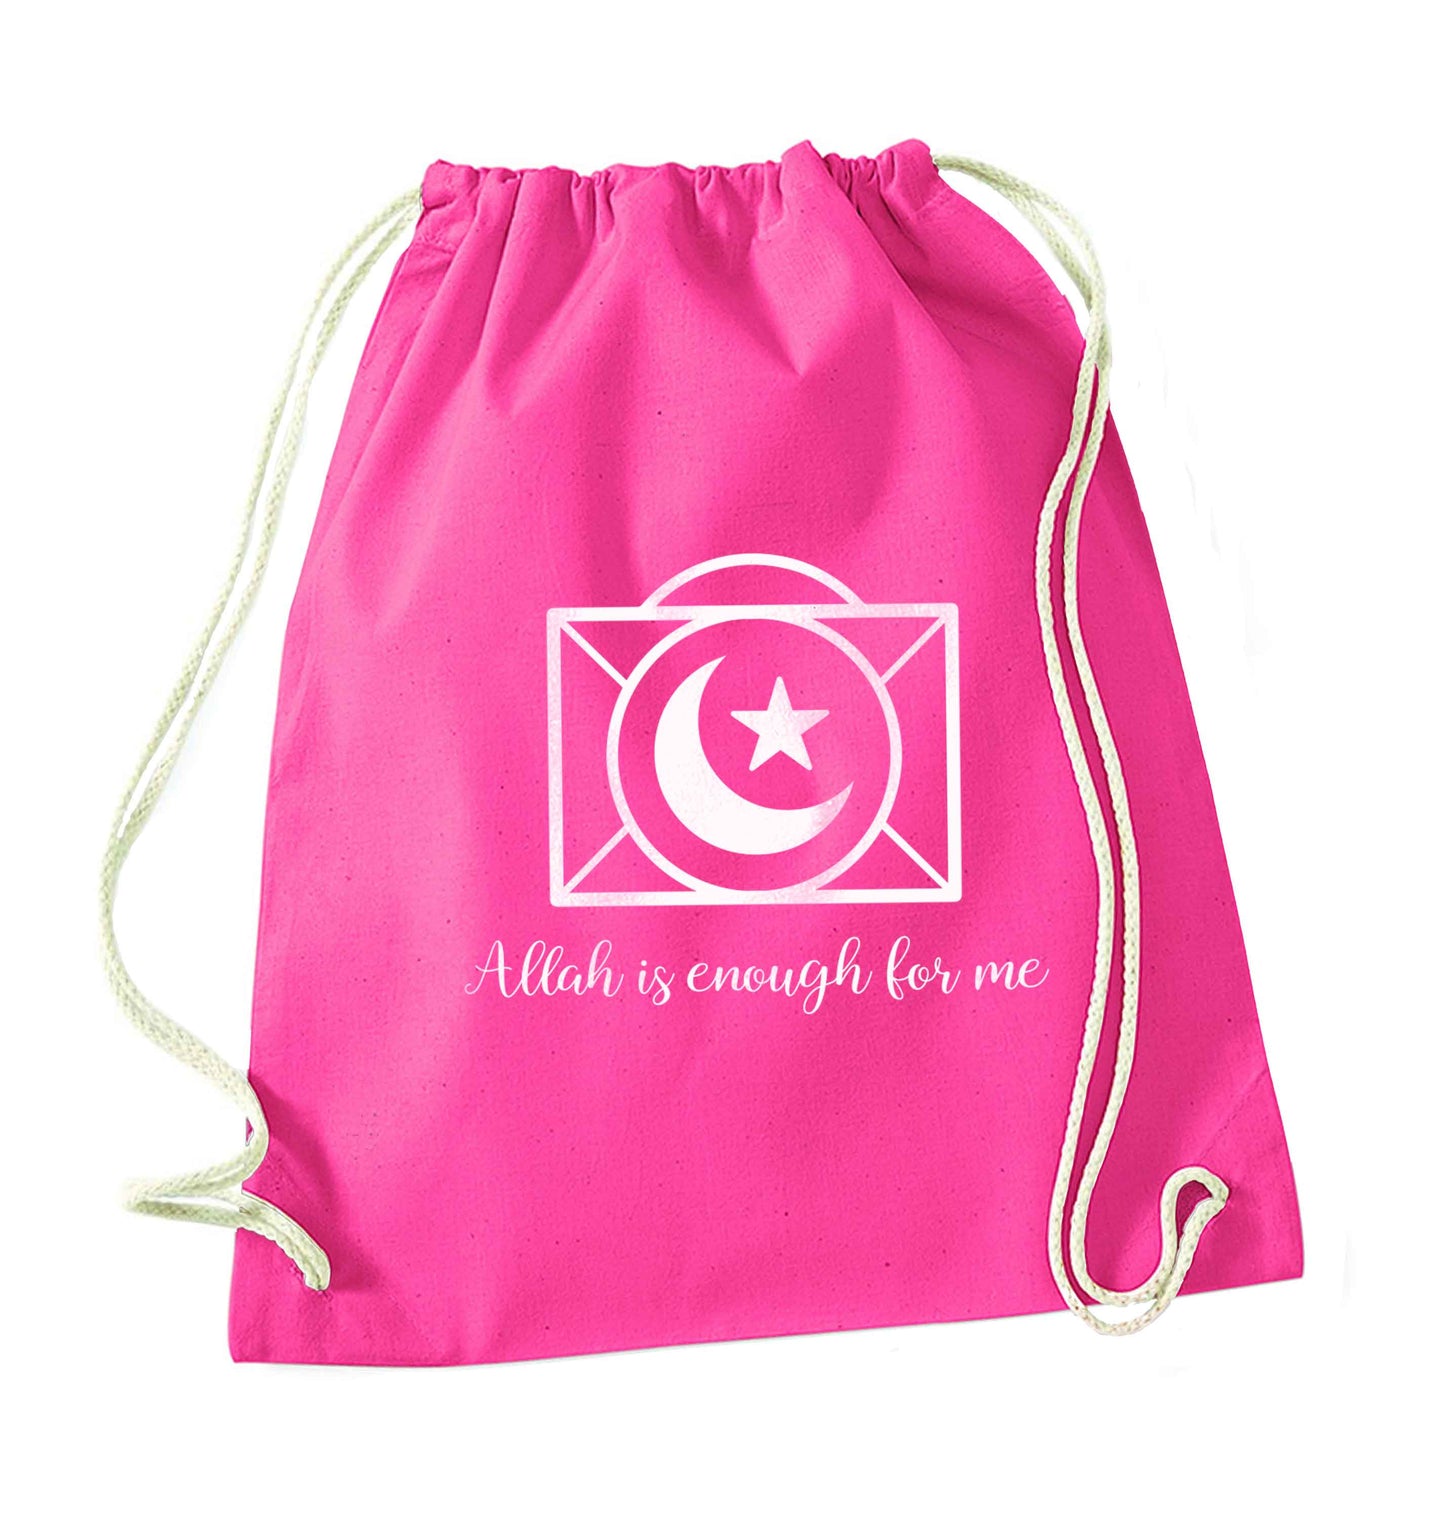 Allah is enough for me pink drawstring bag